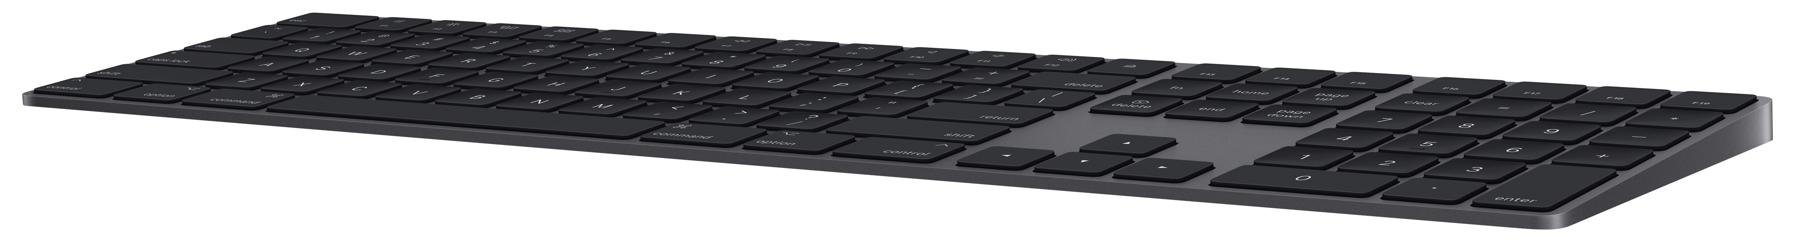 apple keyboard with numeric keypad english usa